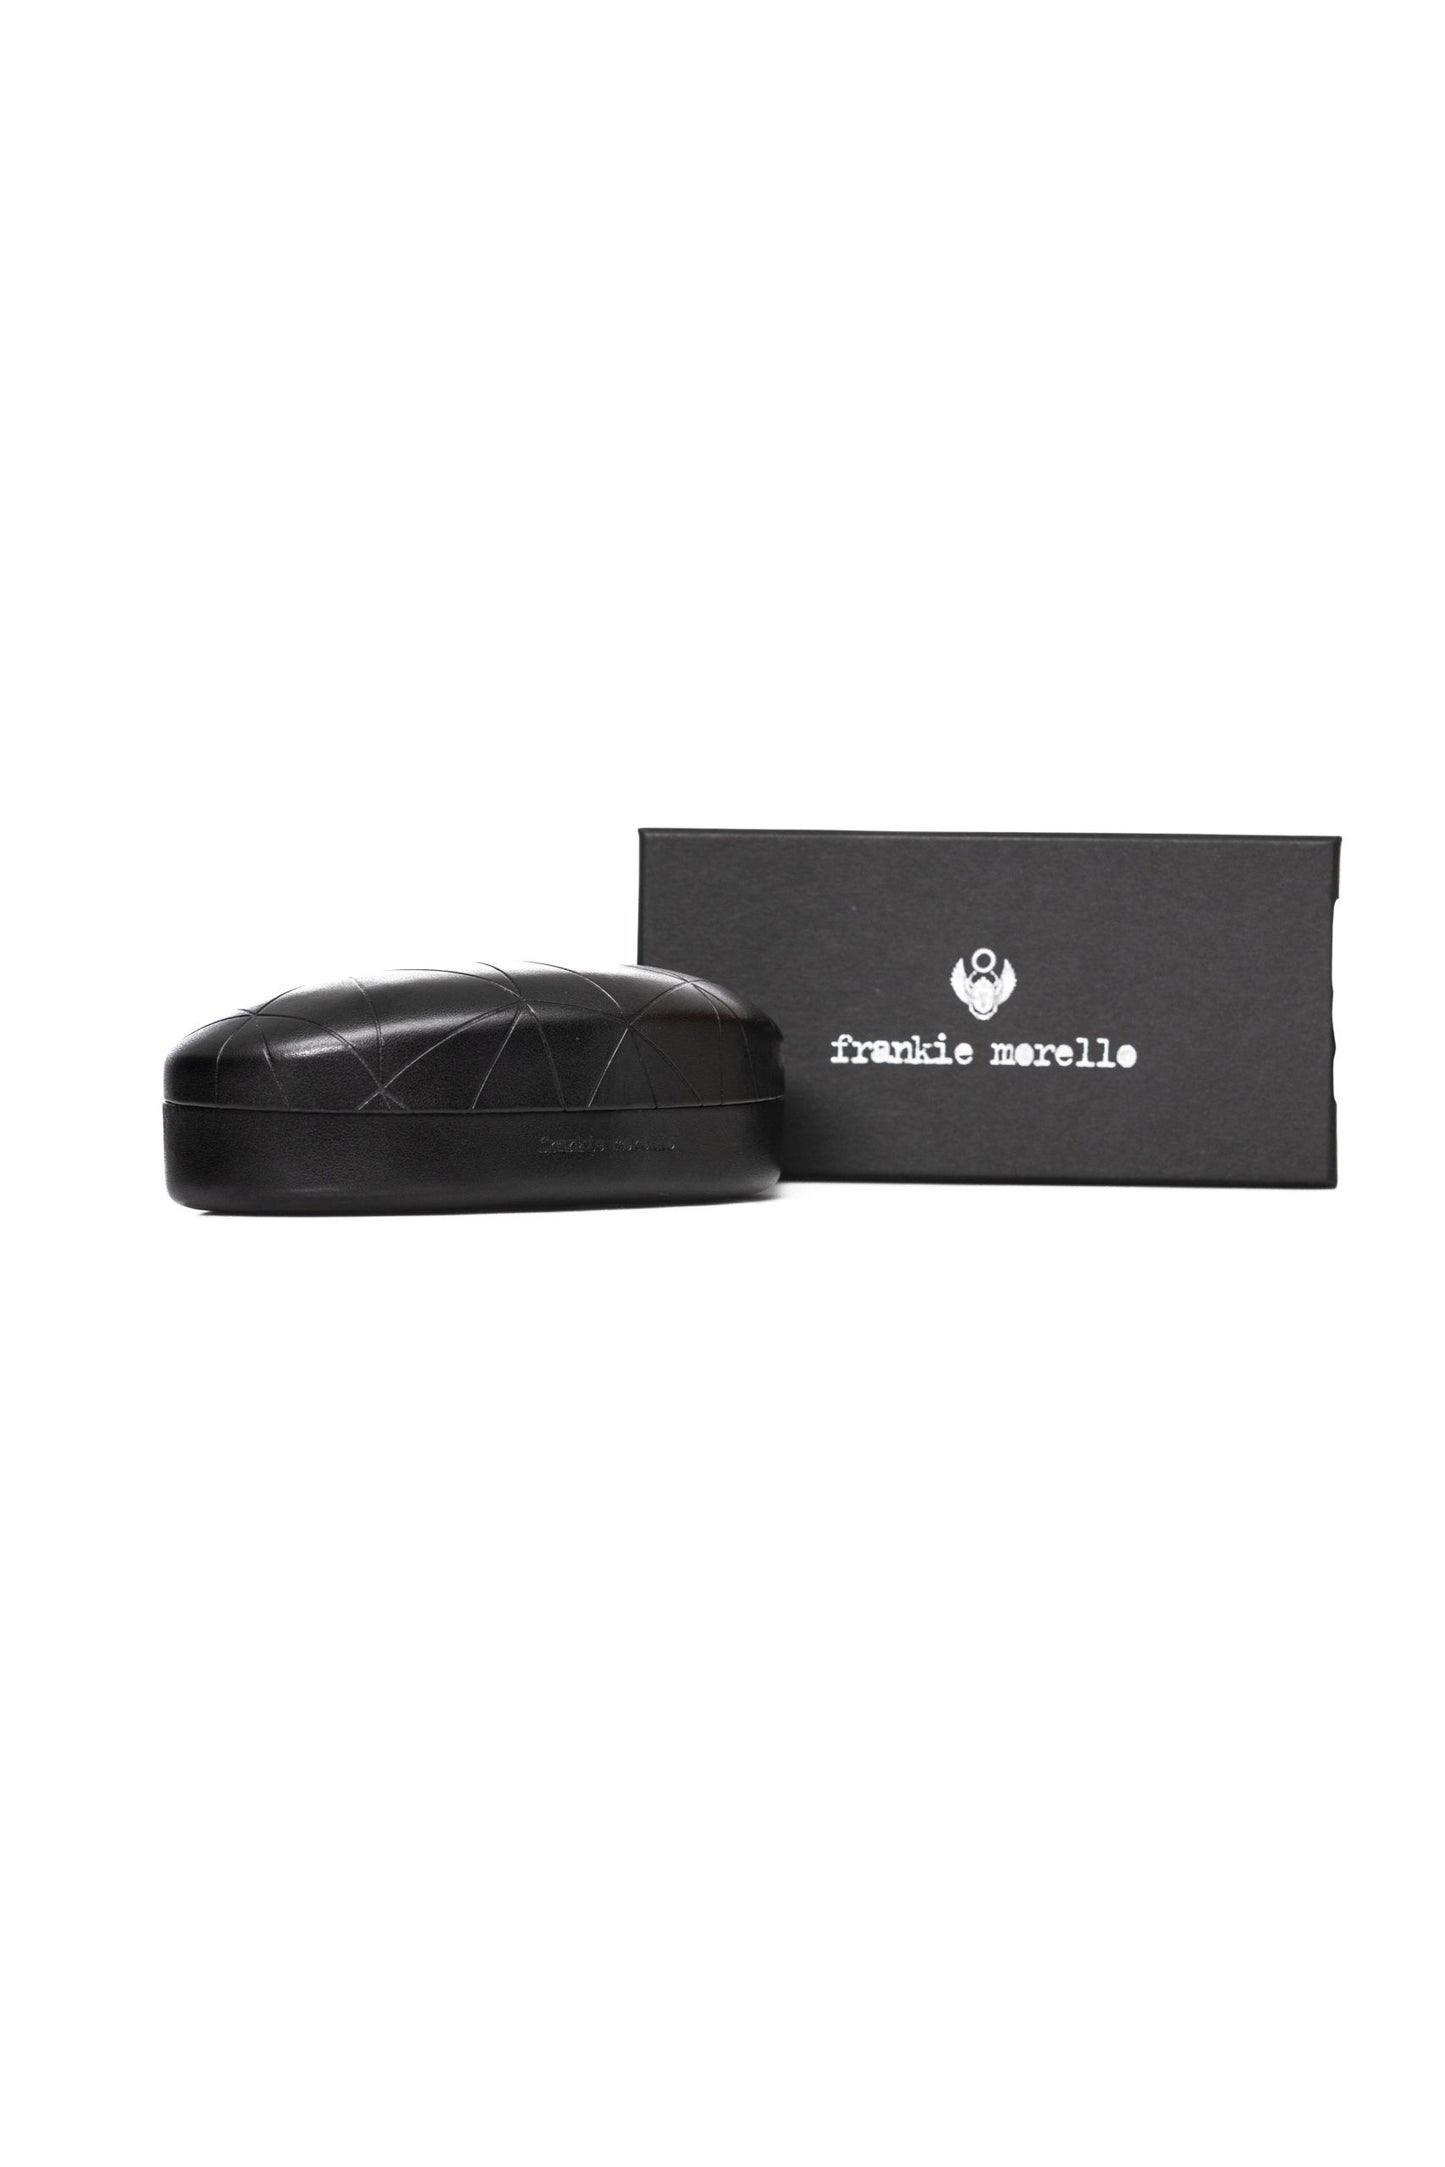 Frankie Morello FRMO-22083 Black Metallic Fibre Sunglasses